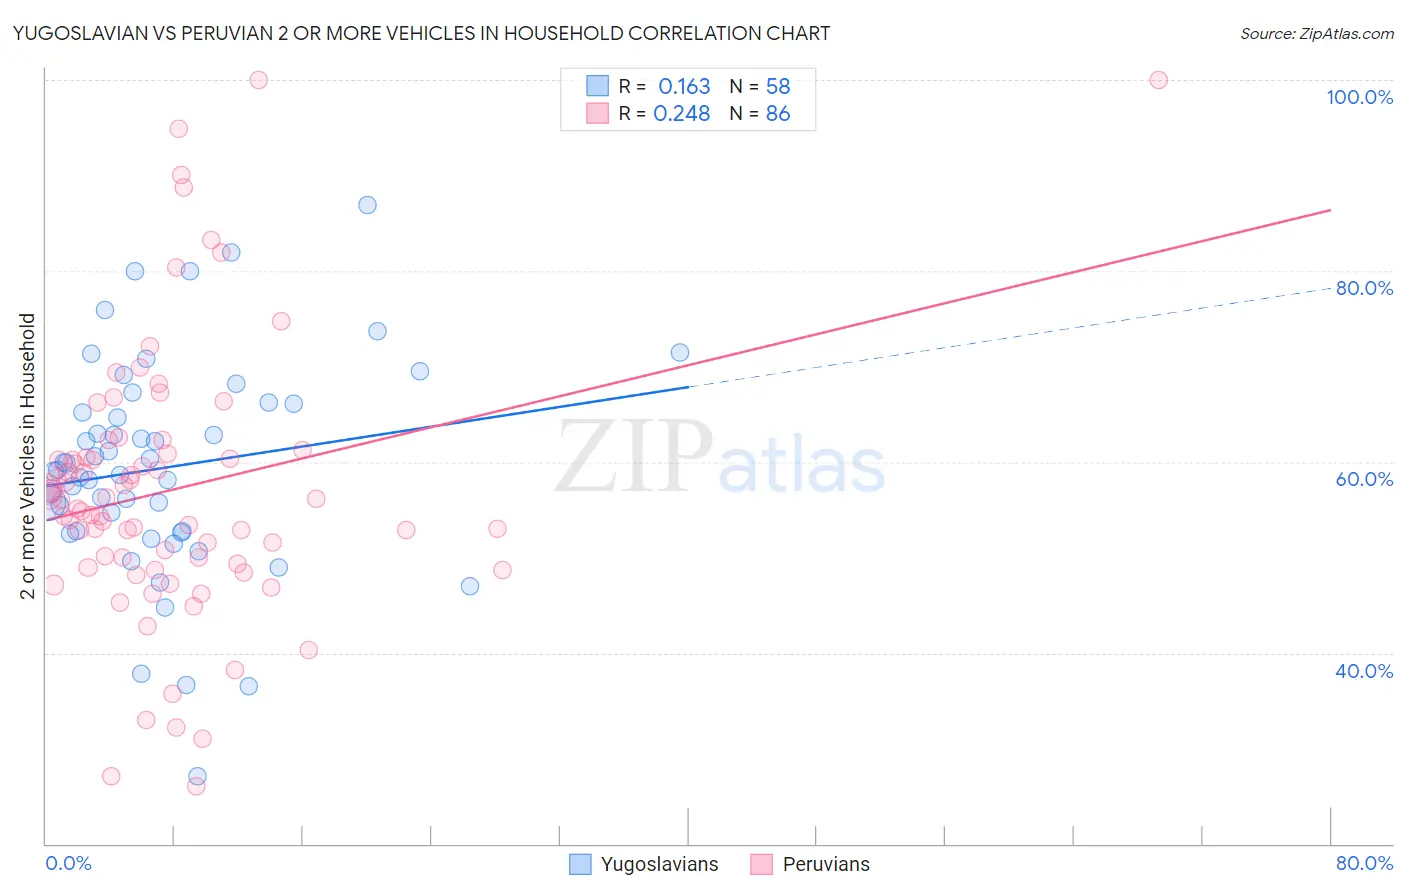 Yugoslavian vs Peruvian 2 or more Vehicles in Household